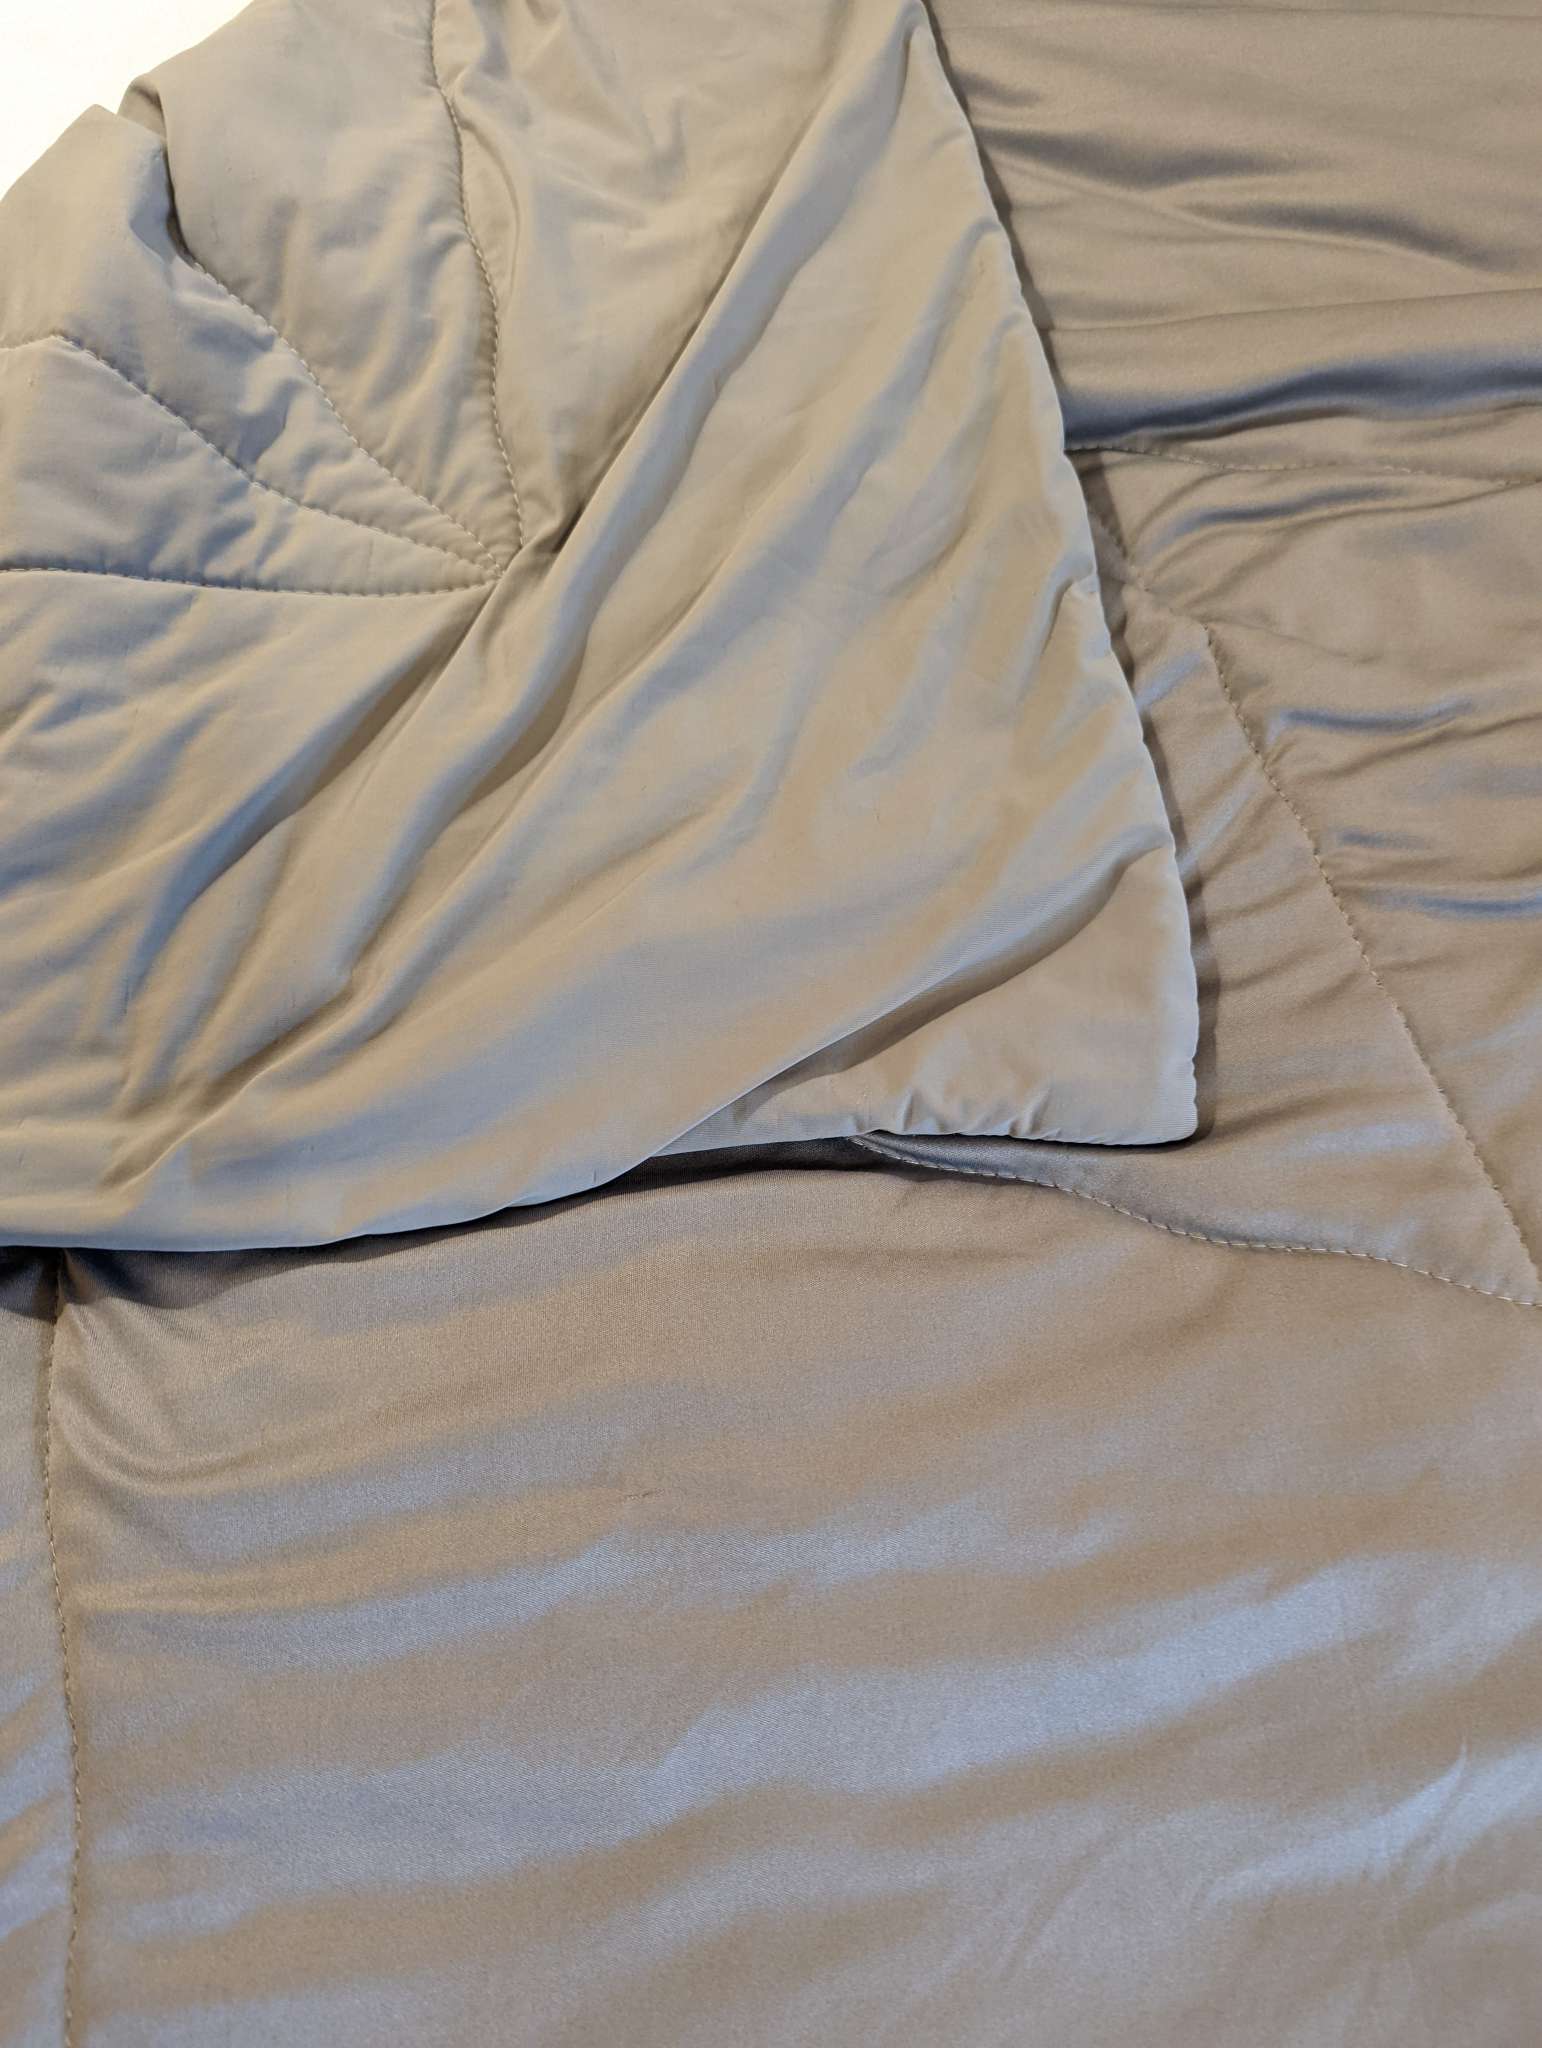 Elegear Cooling Arc-Chill Comforter queen blanket review - The Gadgeteer